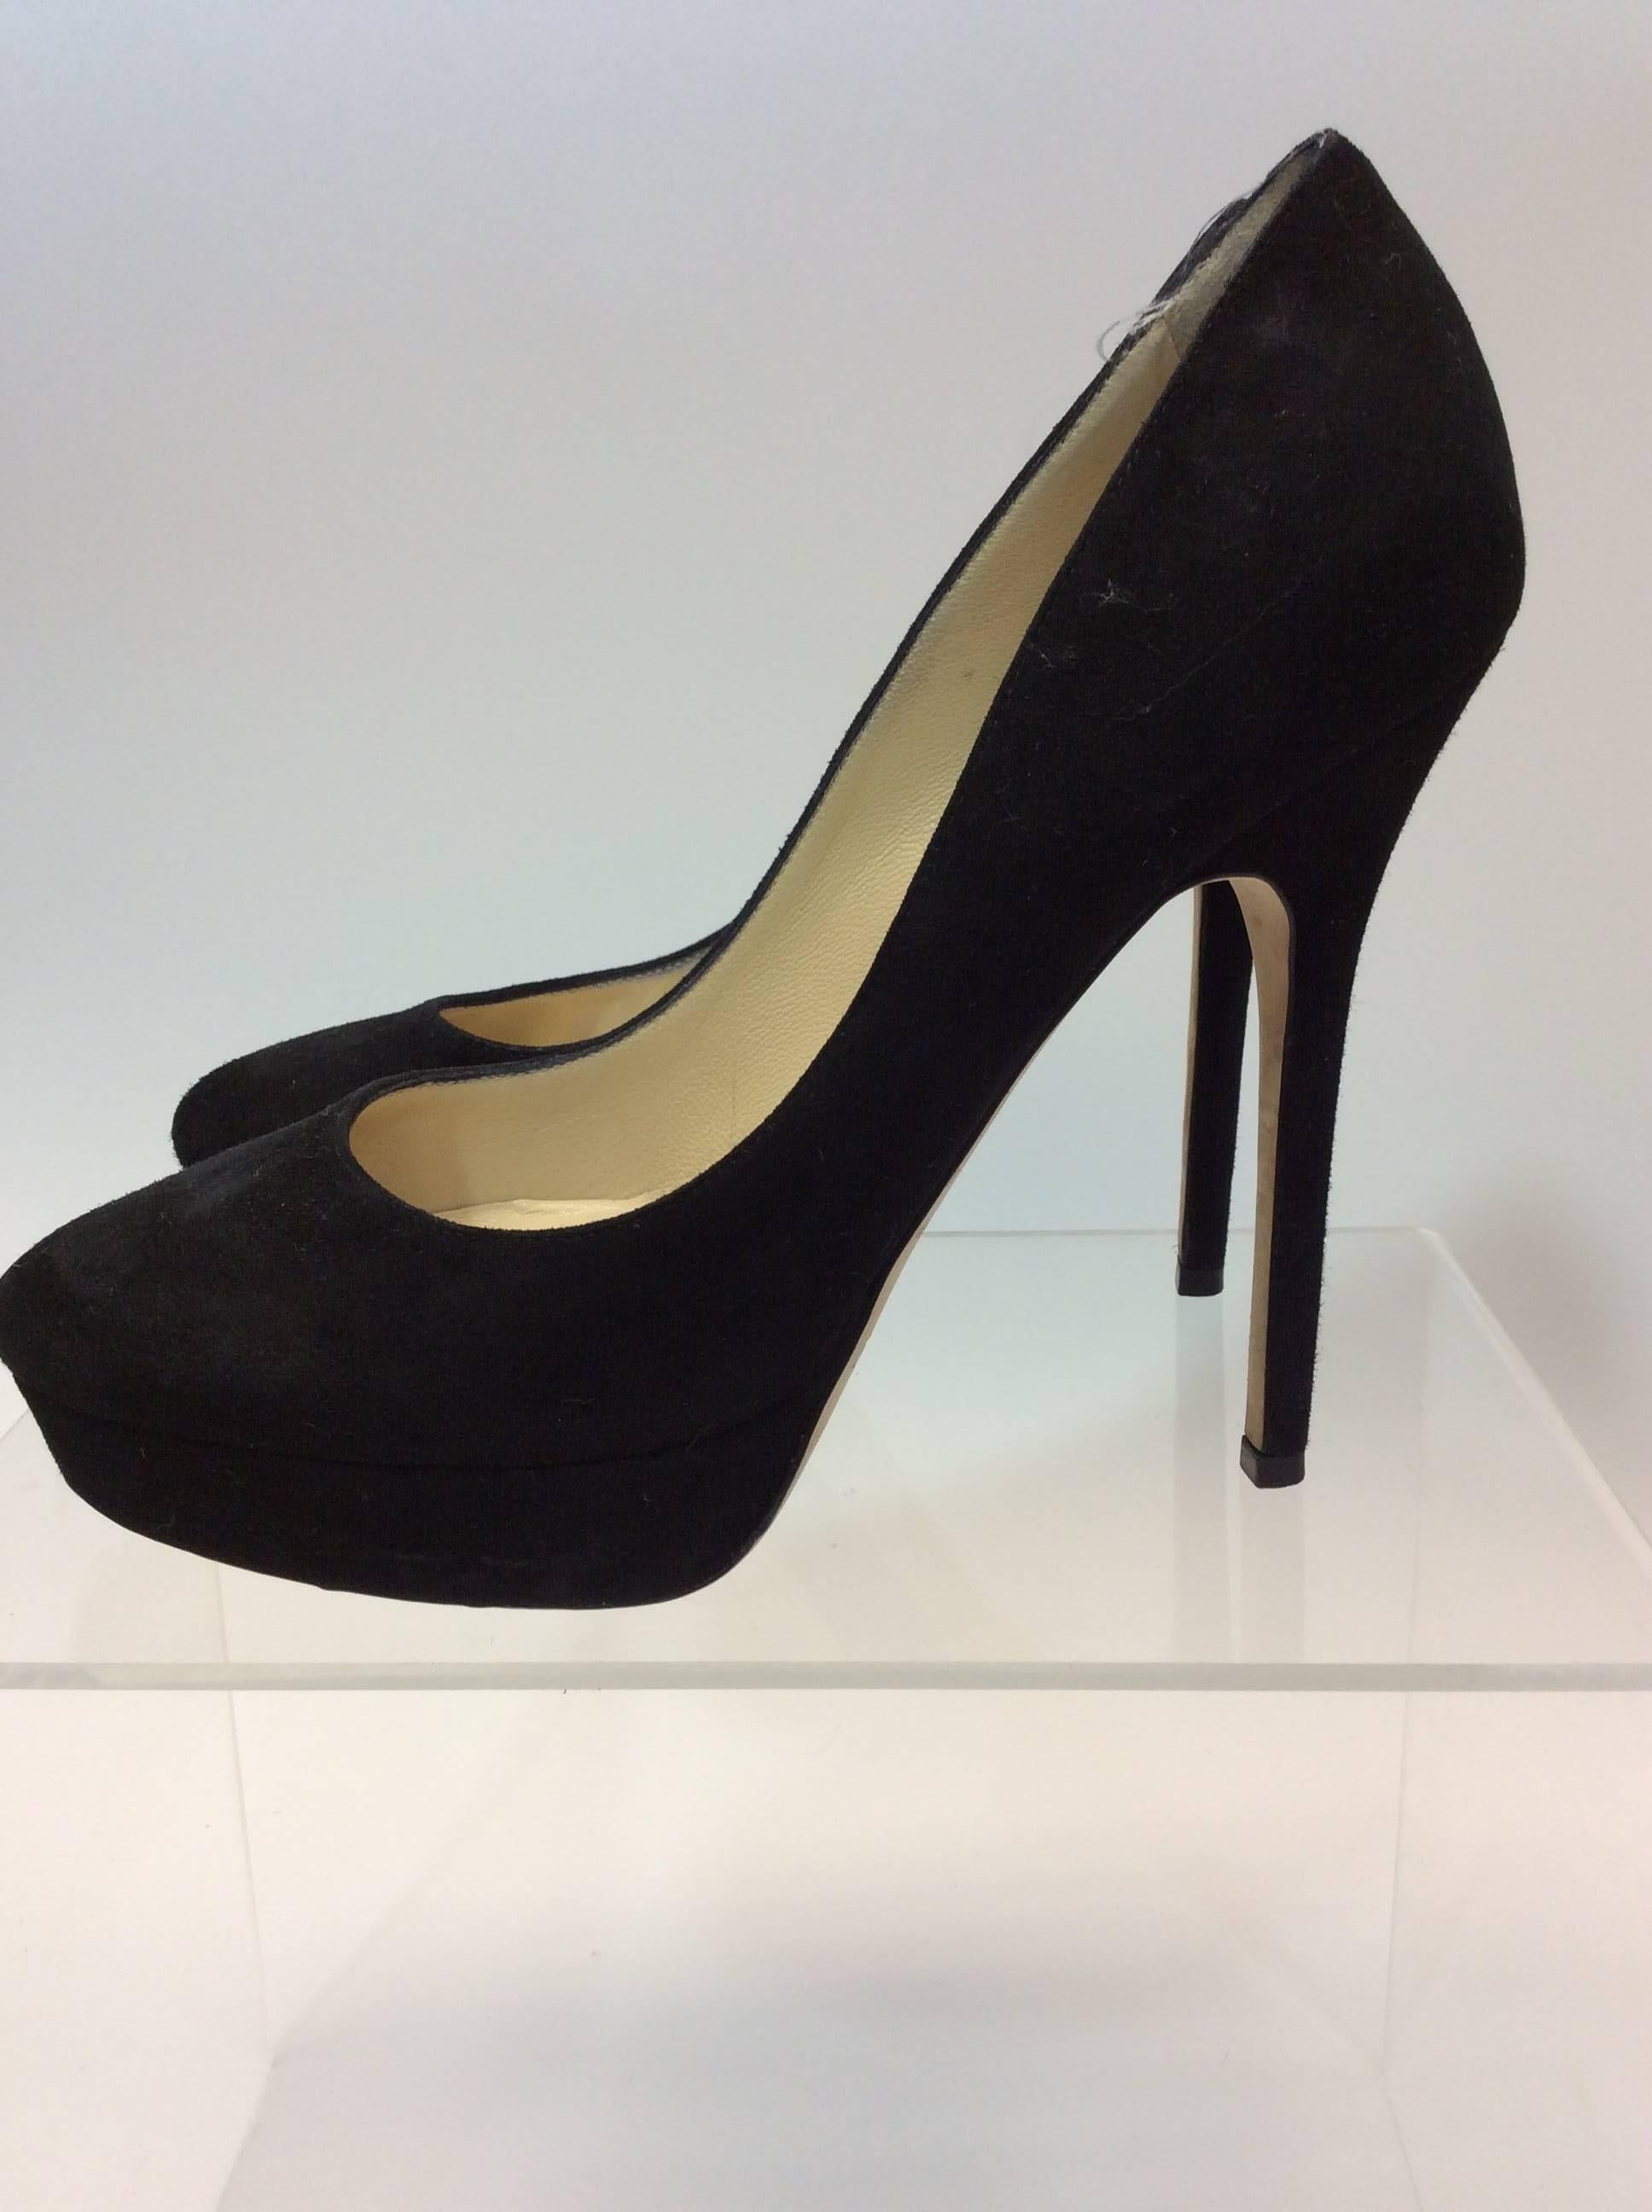 Jimmy Choo Black Heels
5 inch heels
Size 37.5
$250
